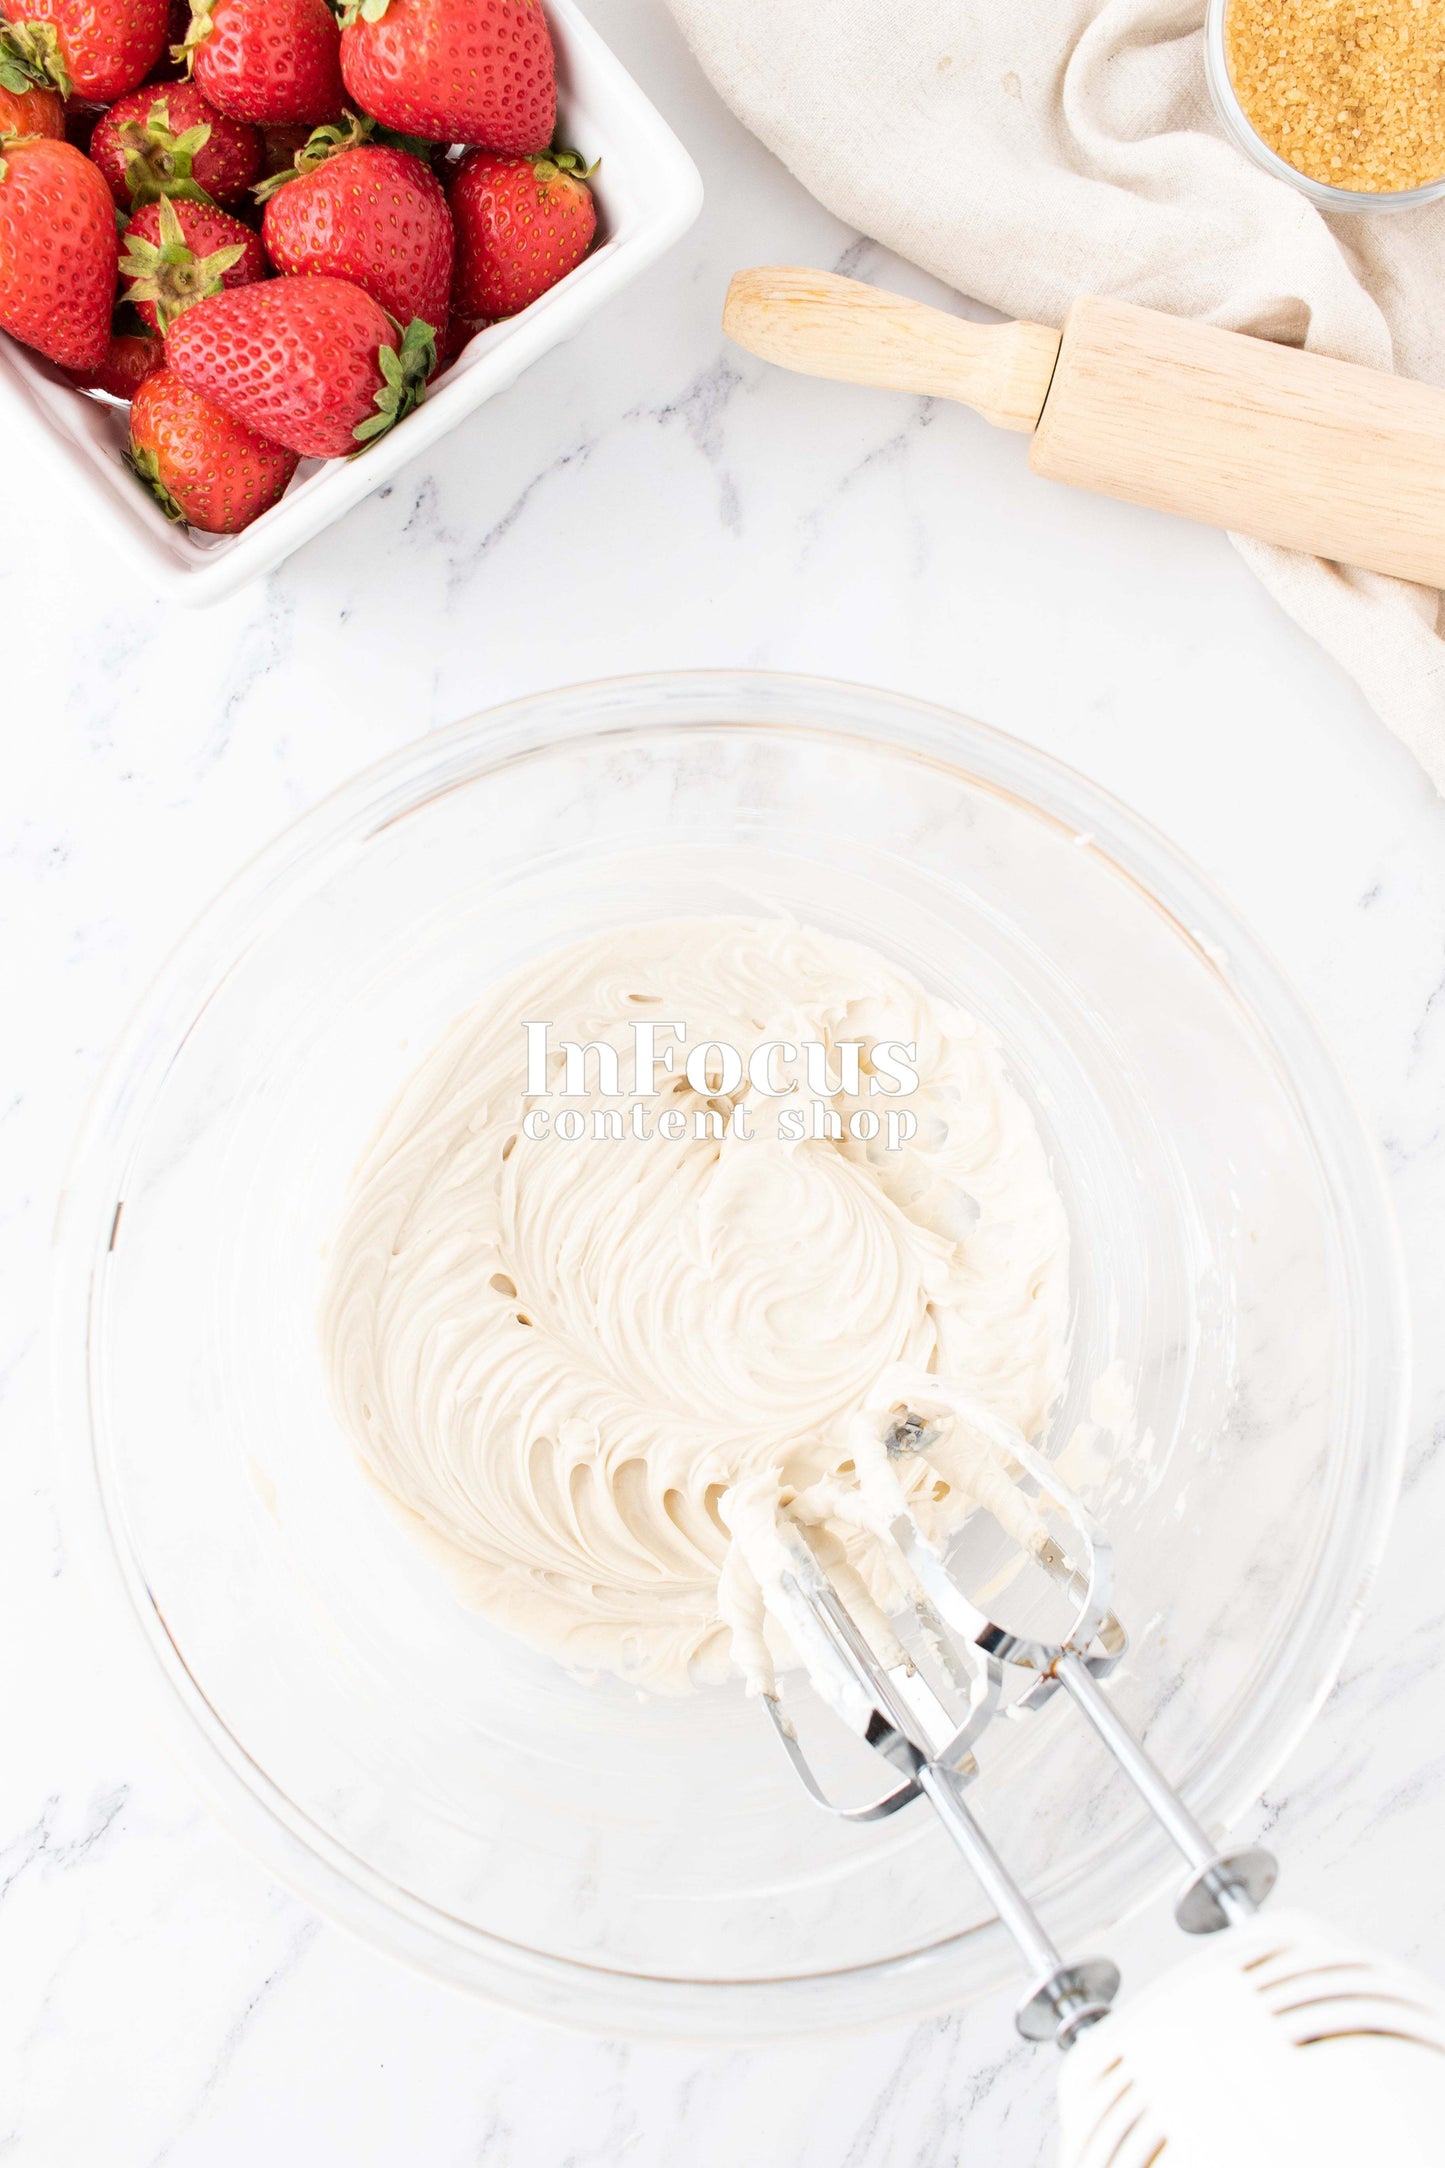 Strawberry Cream Cheese Danishes- Semi-Exclusive set 2/2